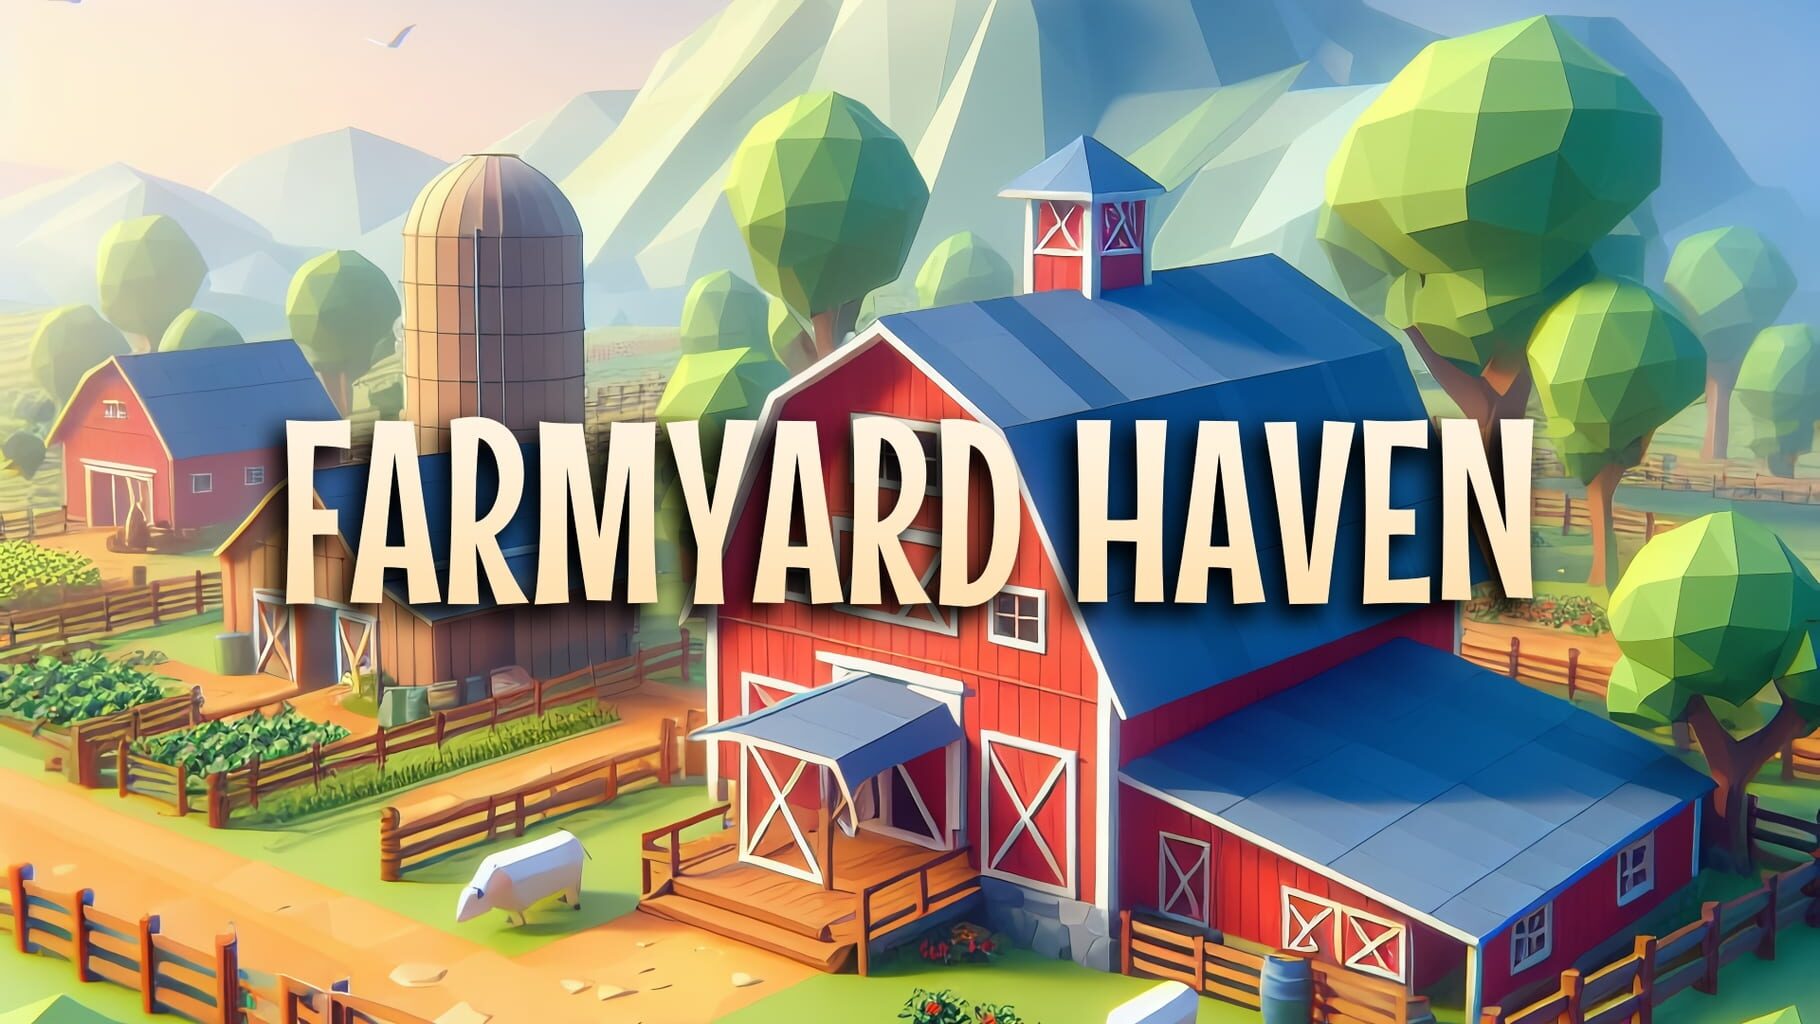 Farmyard Haven artwork